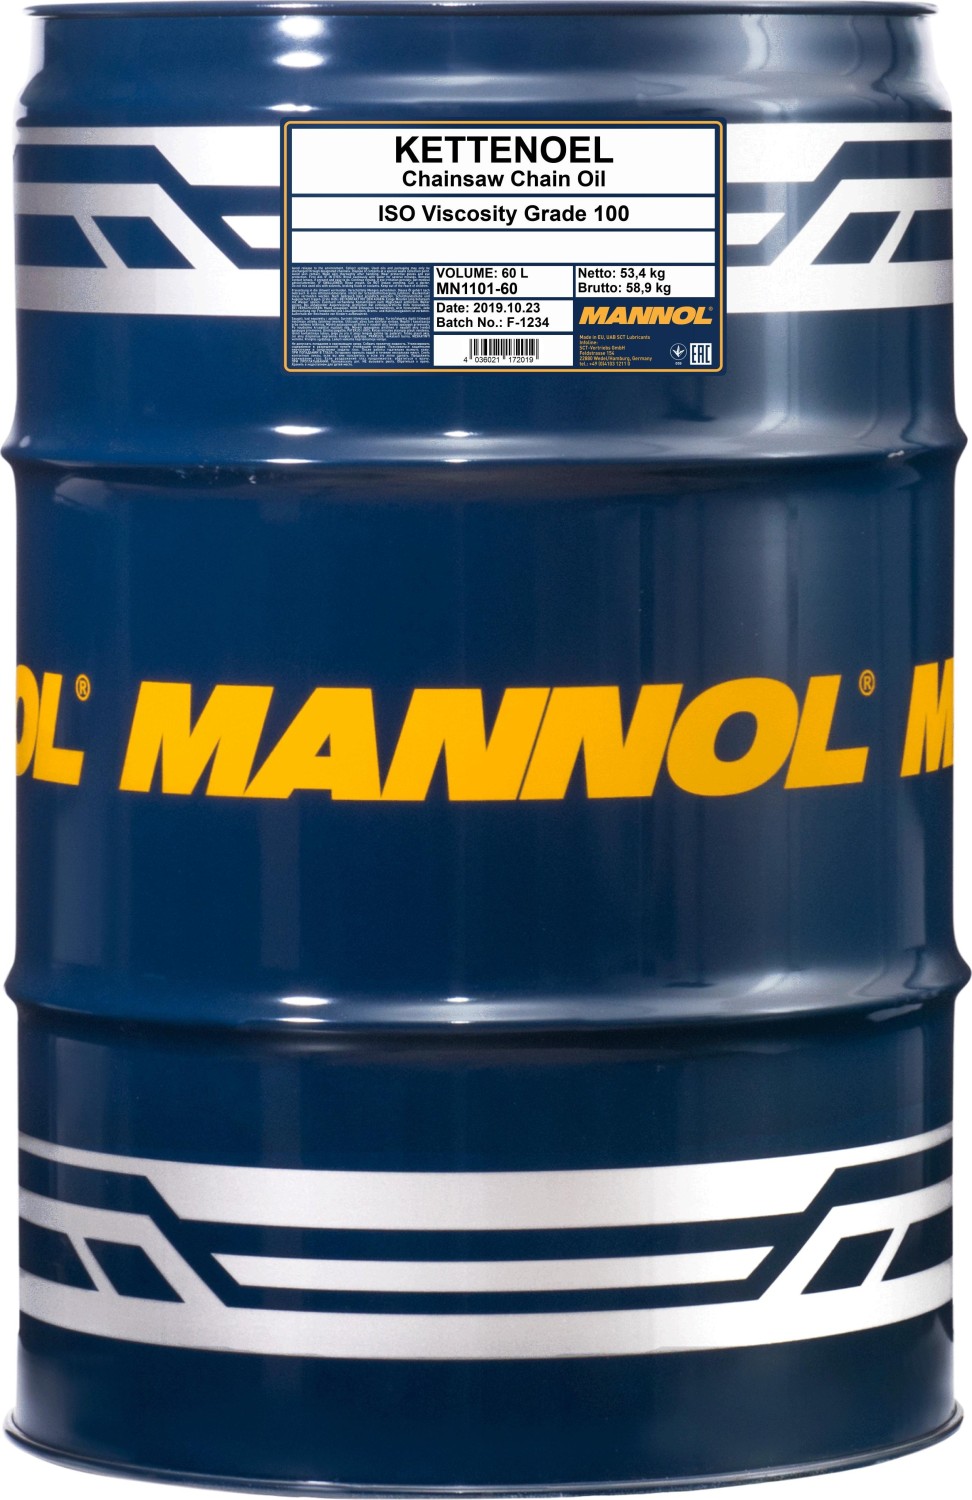 Motorsäge Kettensäge Öl Kettenöl MANNOL MN1101-1 4 X 1 Liter bei , 18,49 €